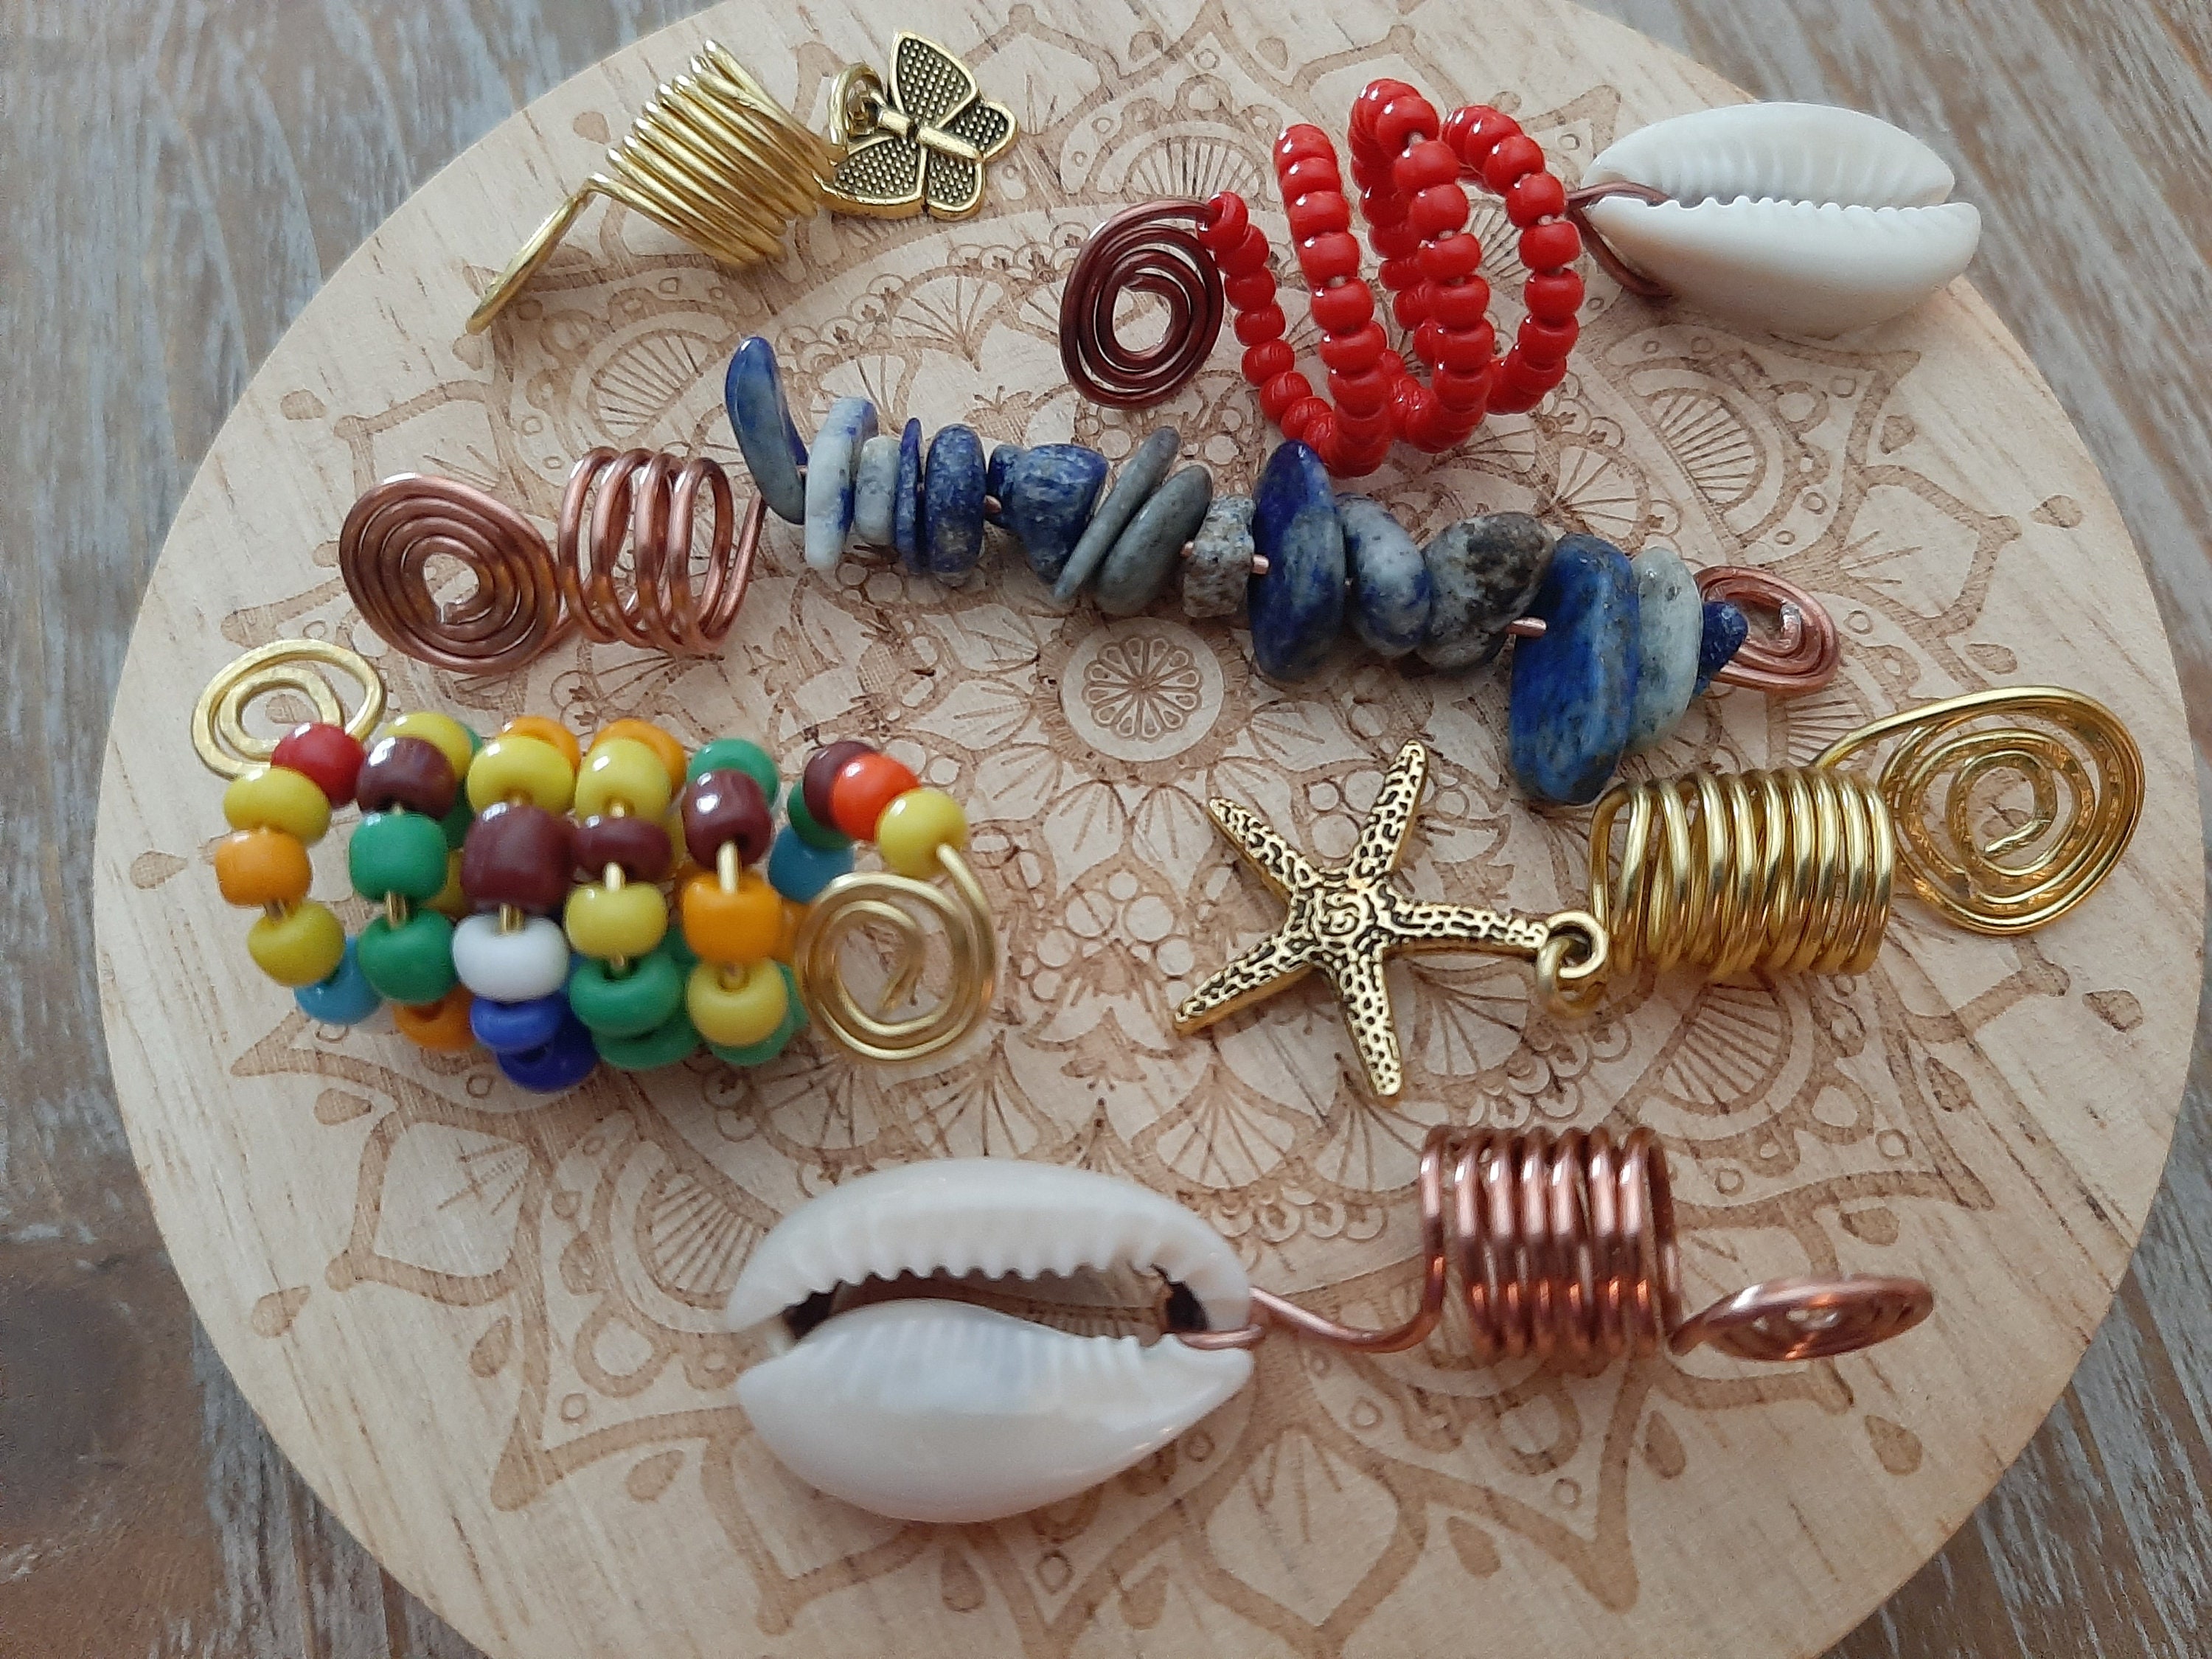 Amethyst loc jewelry dreadlock bead boho dread bead hair jewelry for braids